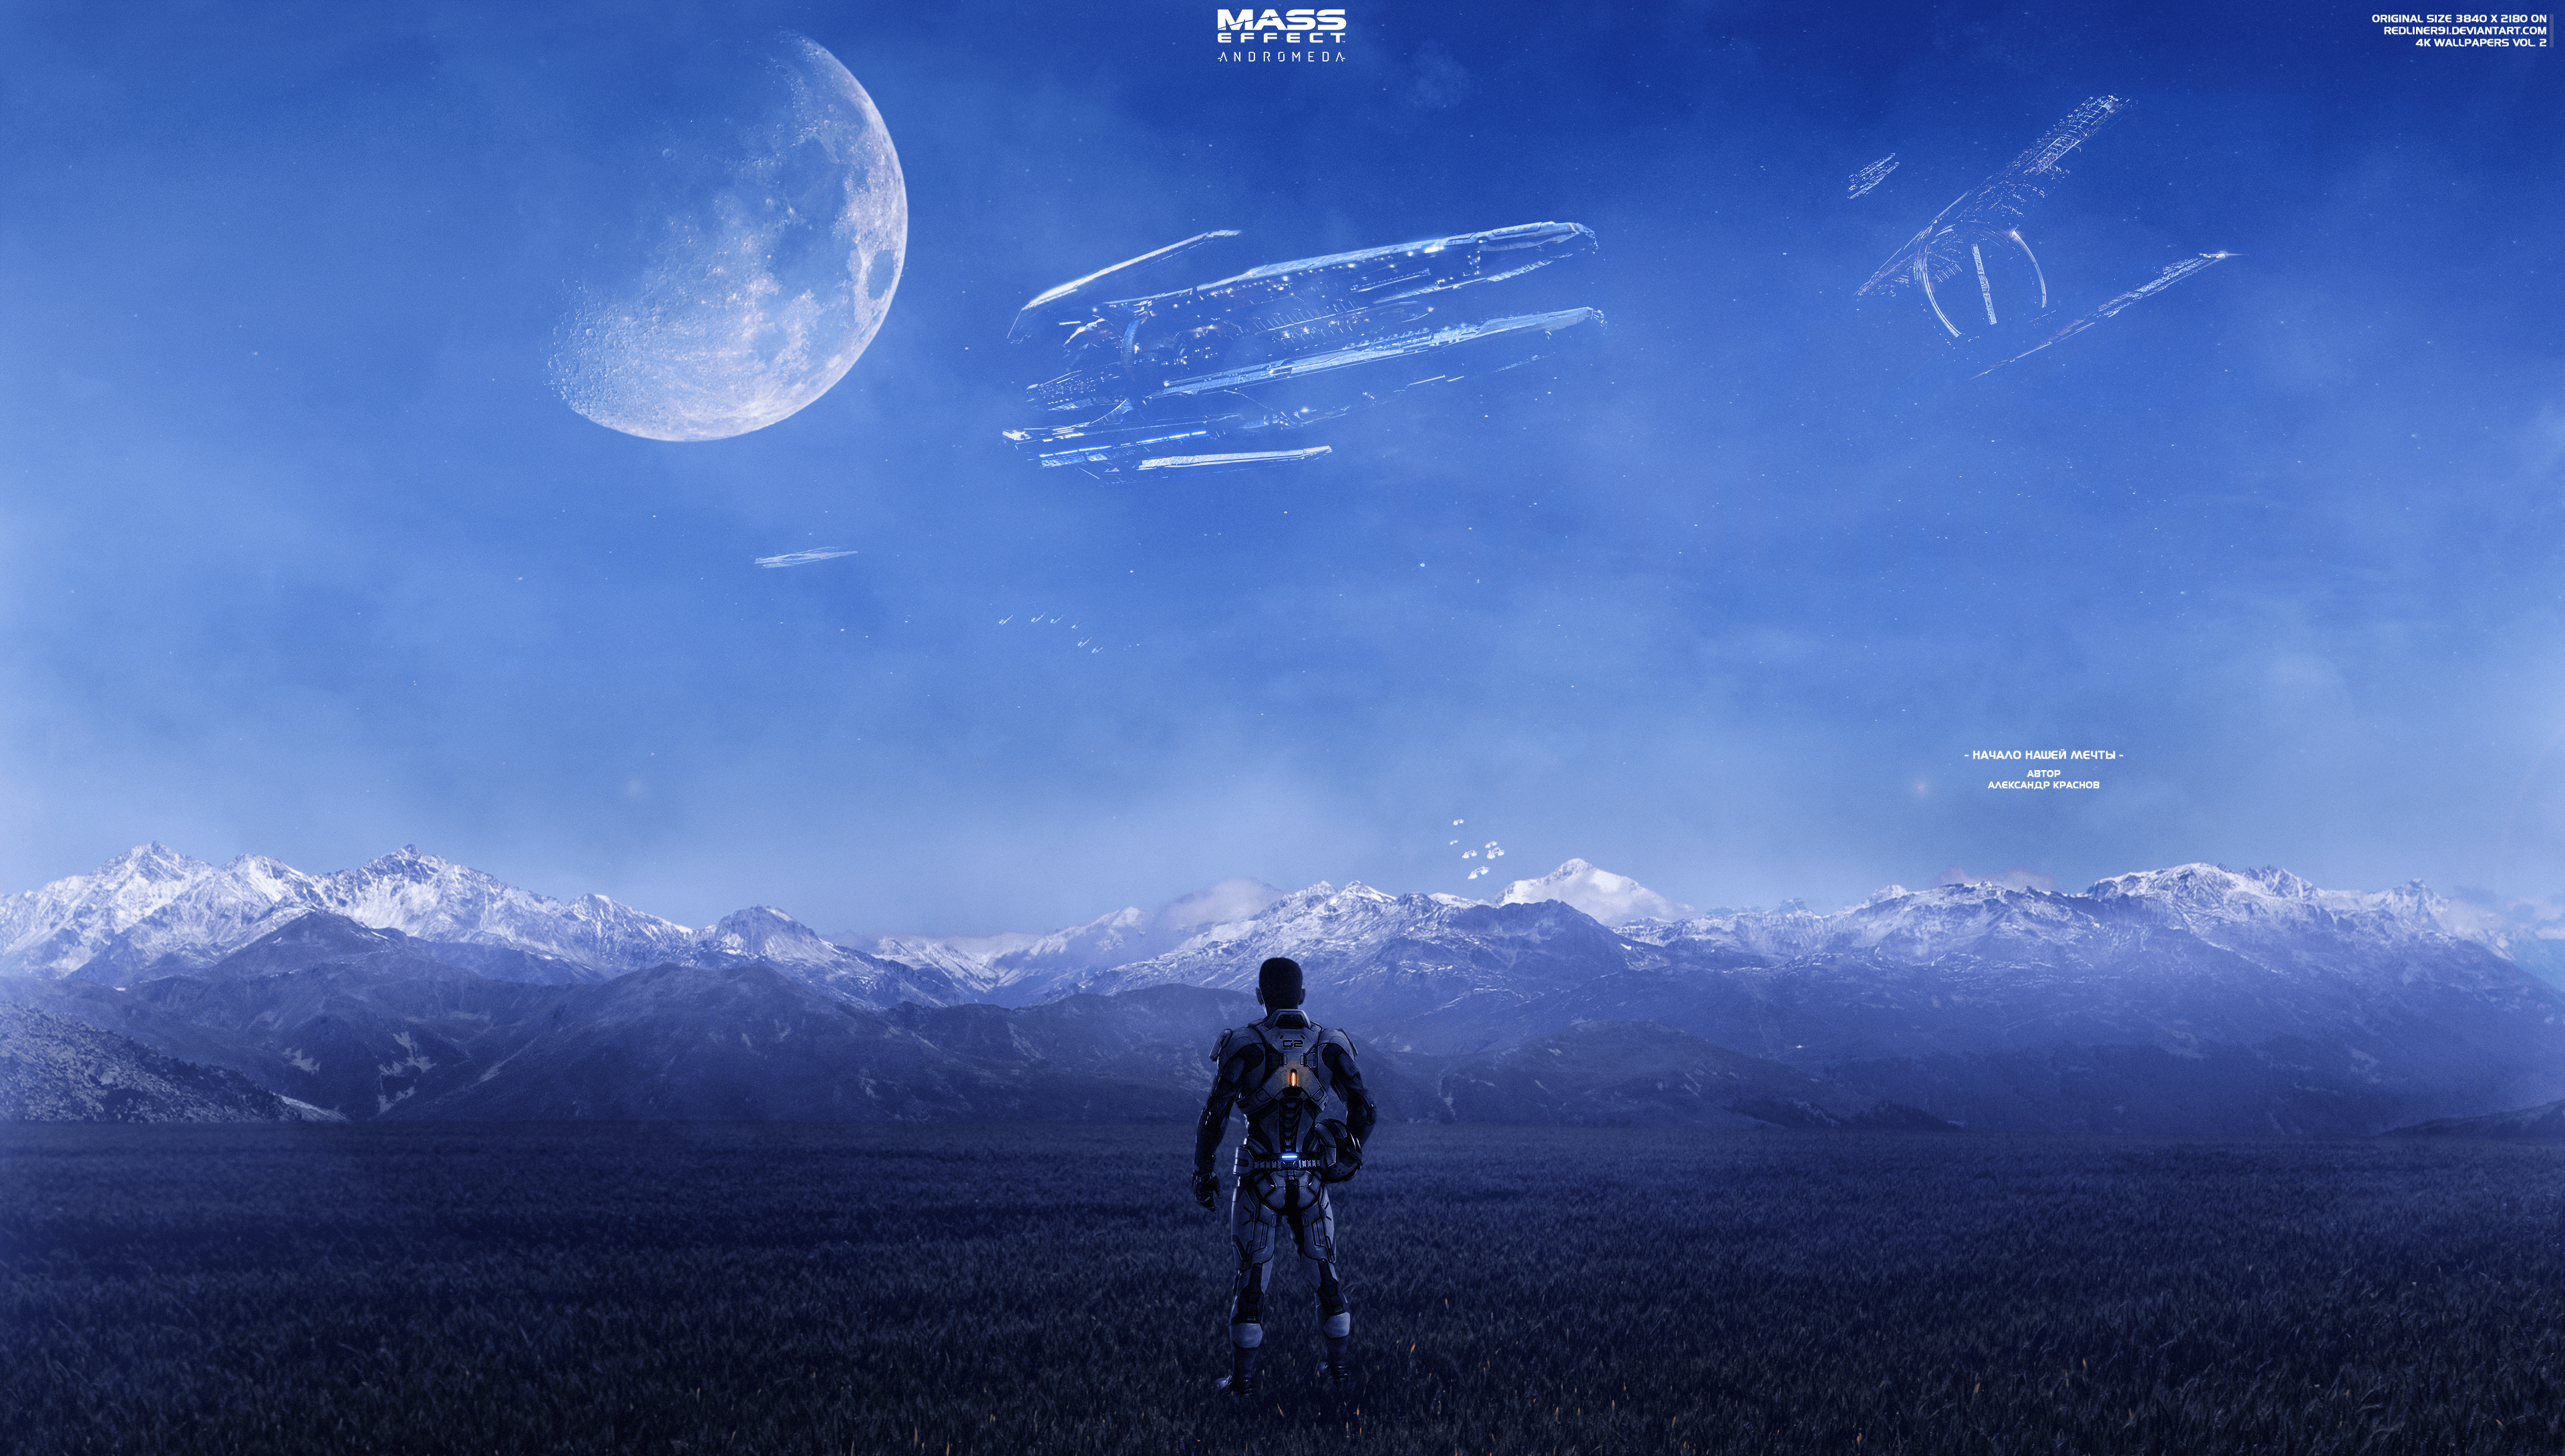 Mass Effect: Andromeda 4k Ultra HD Wallpaper